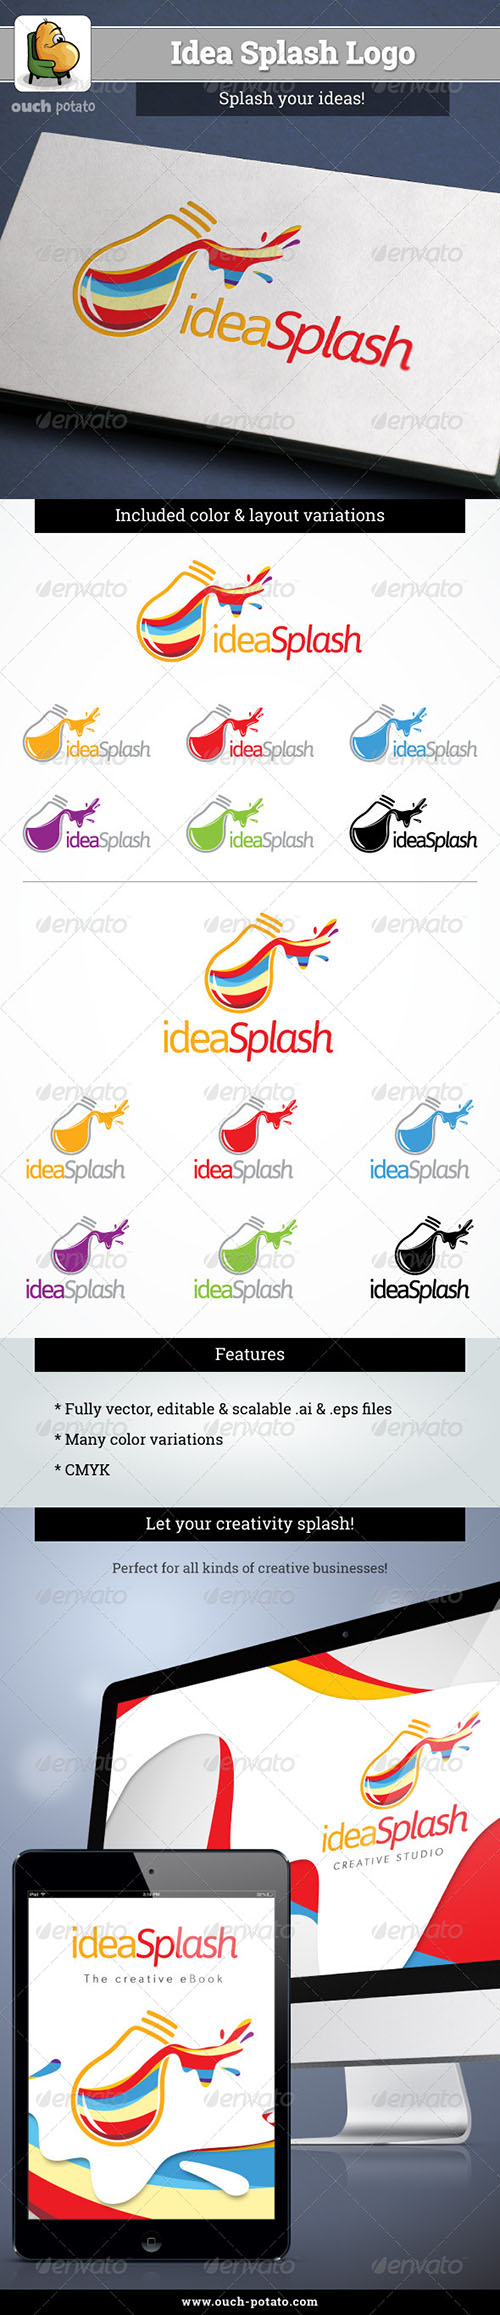 GraphicRiver - Idea Splash Logo 2844181